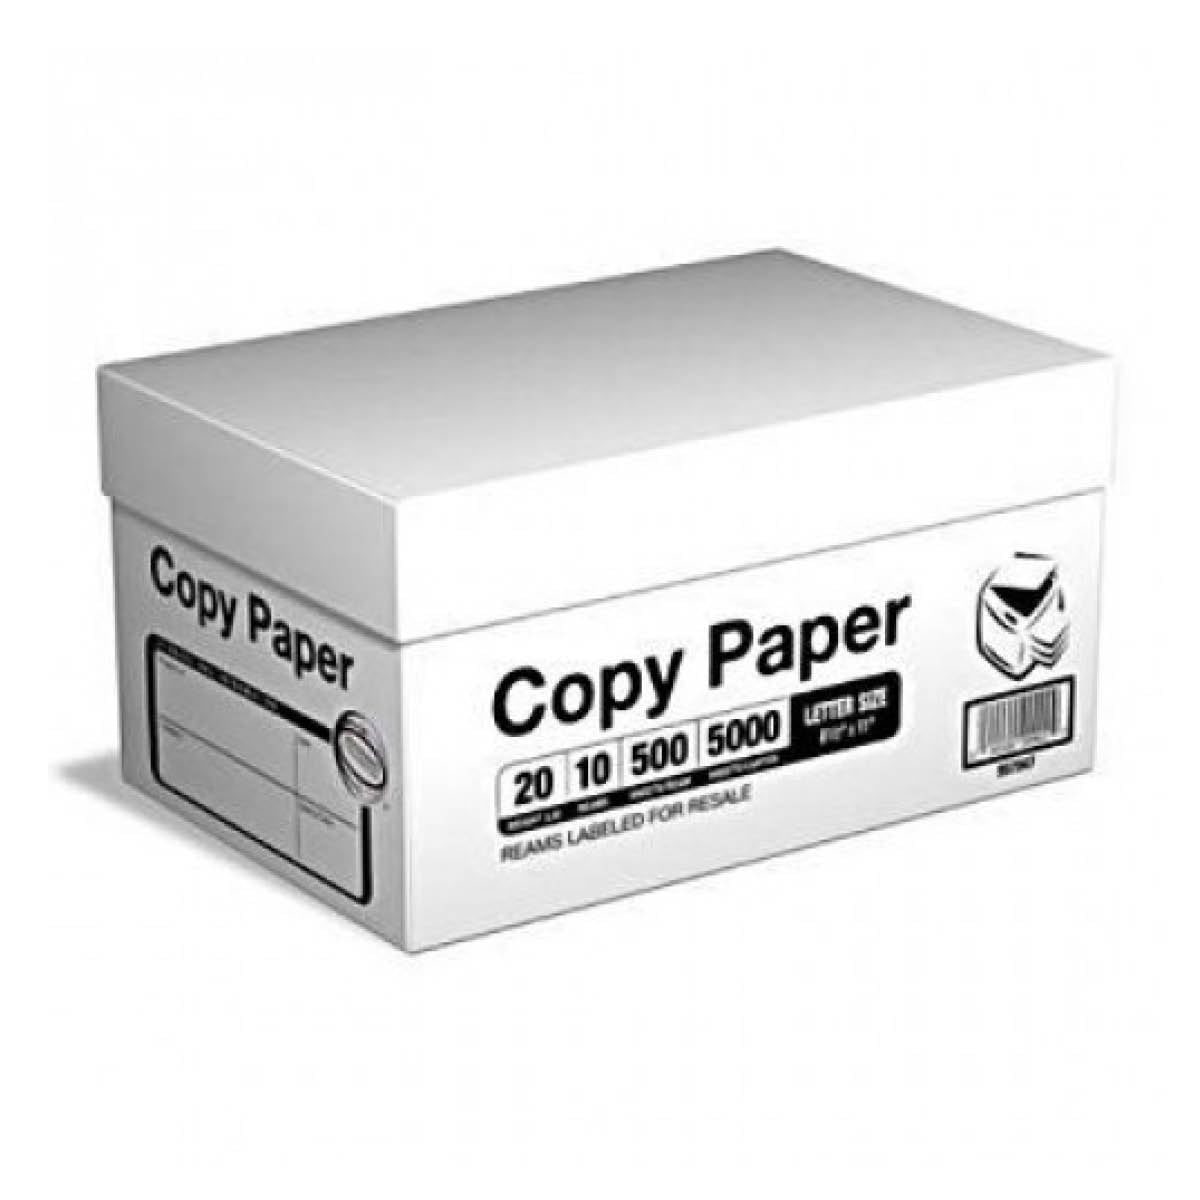 Copy Paper, Case of 5000 Sheets